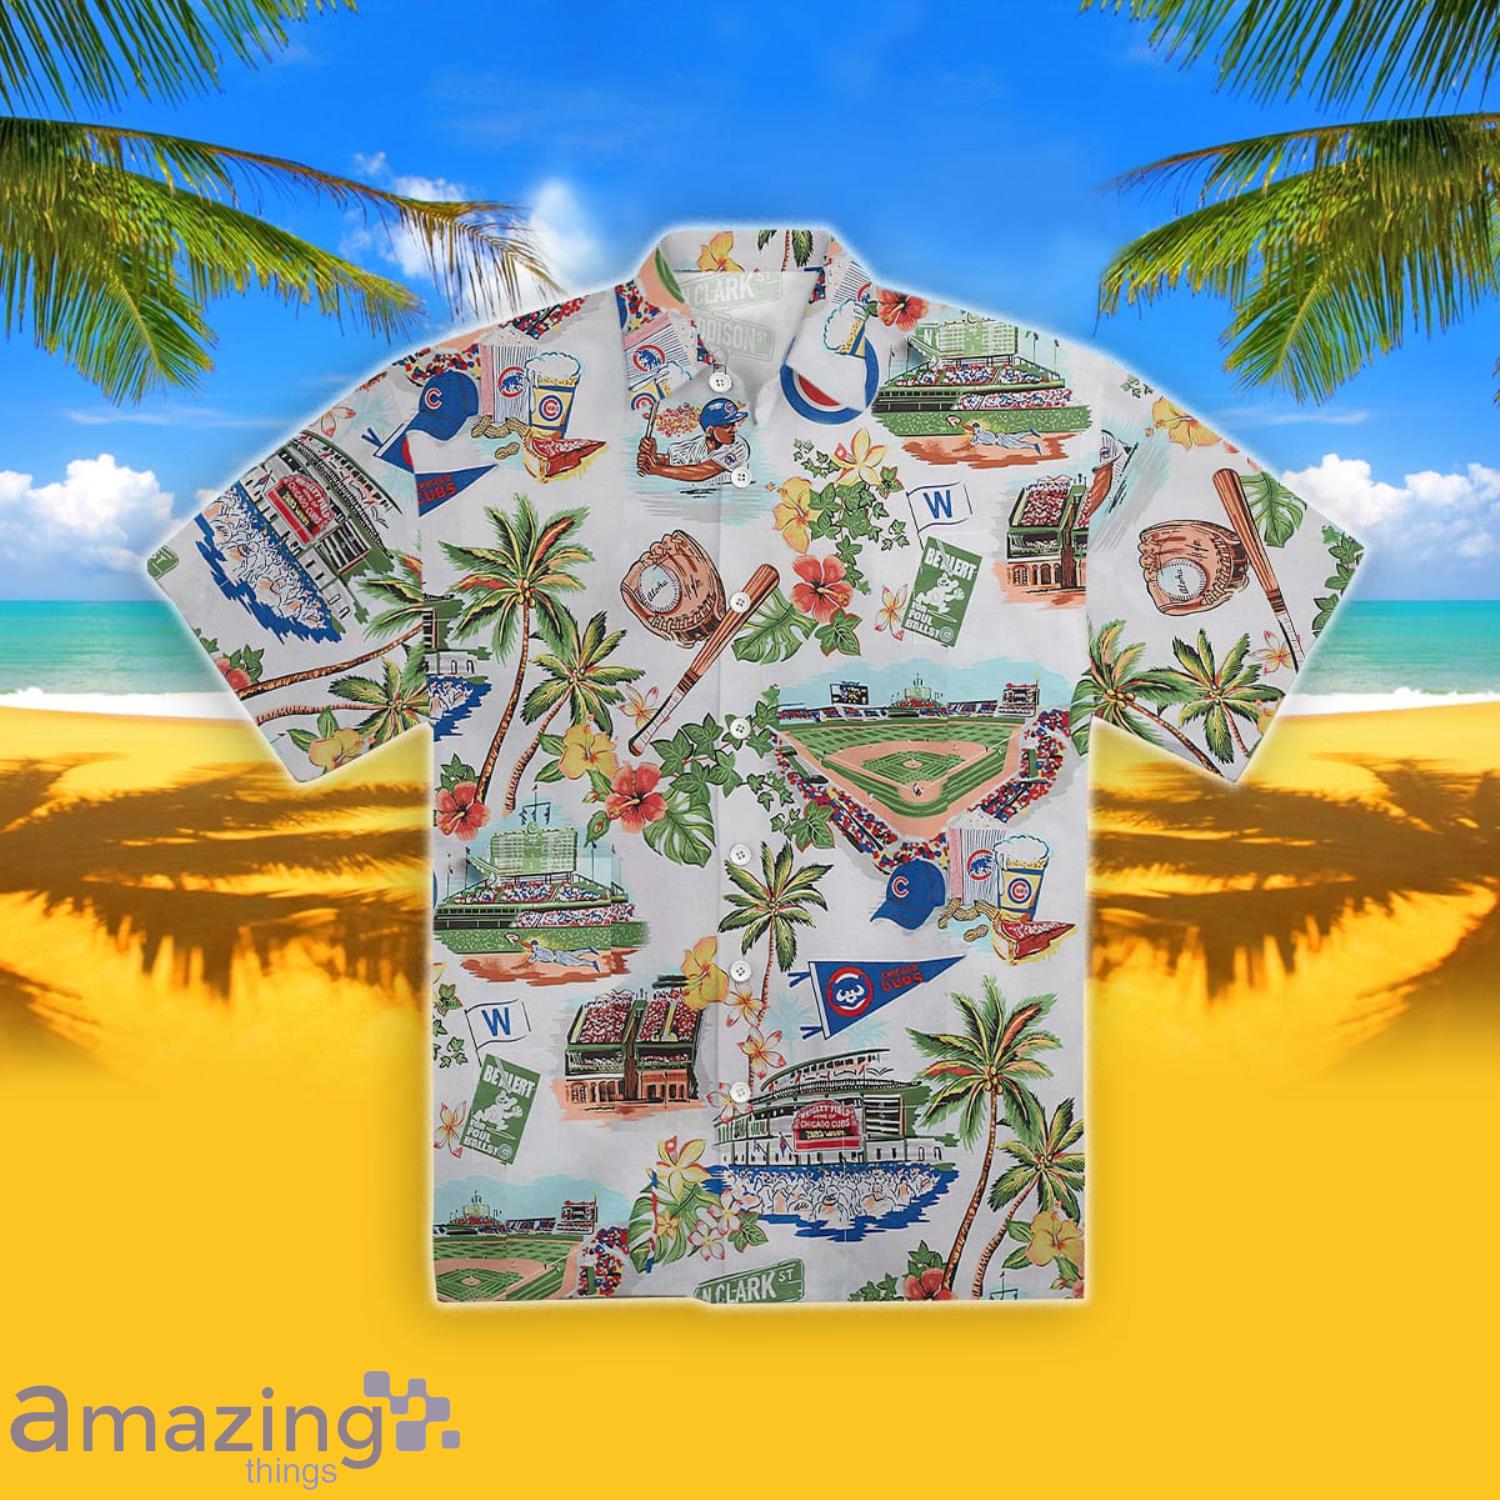 Chicago Cubs Hawaiian Shirts - Trendy Aloha